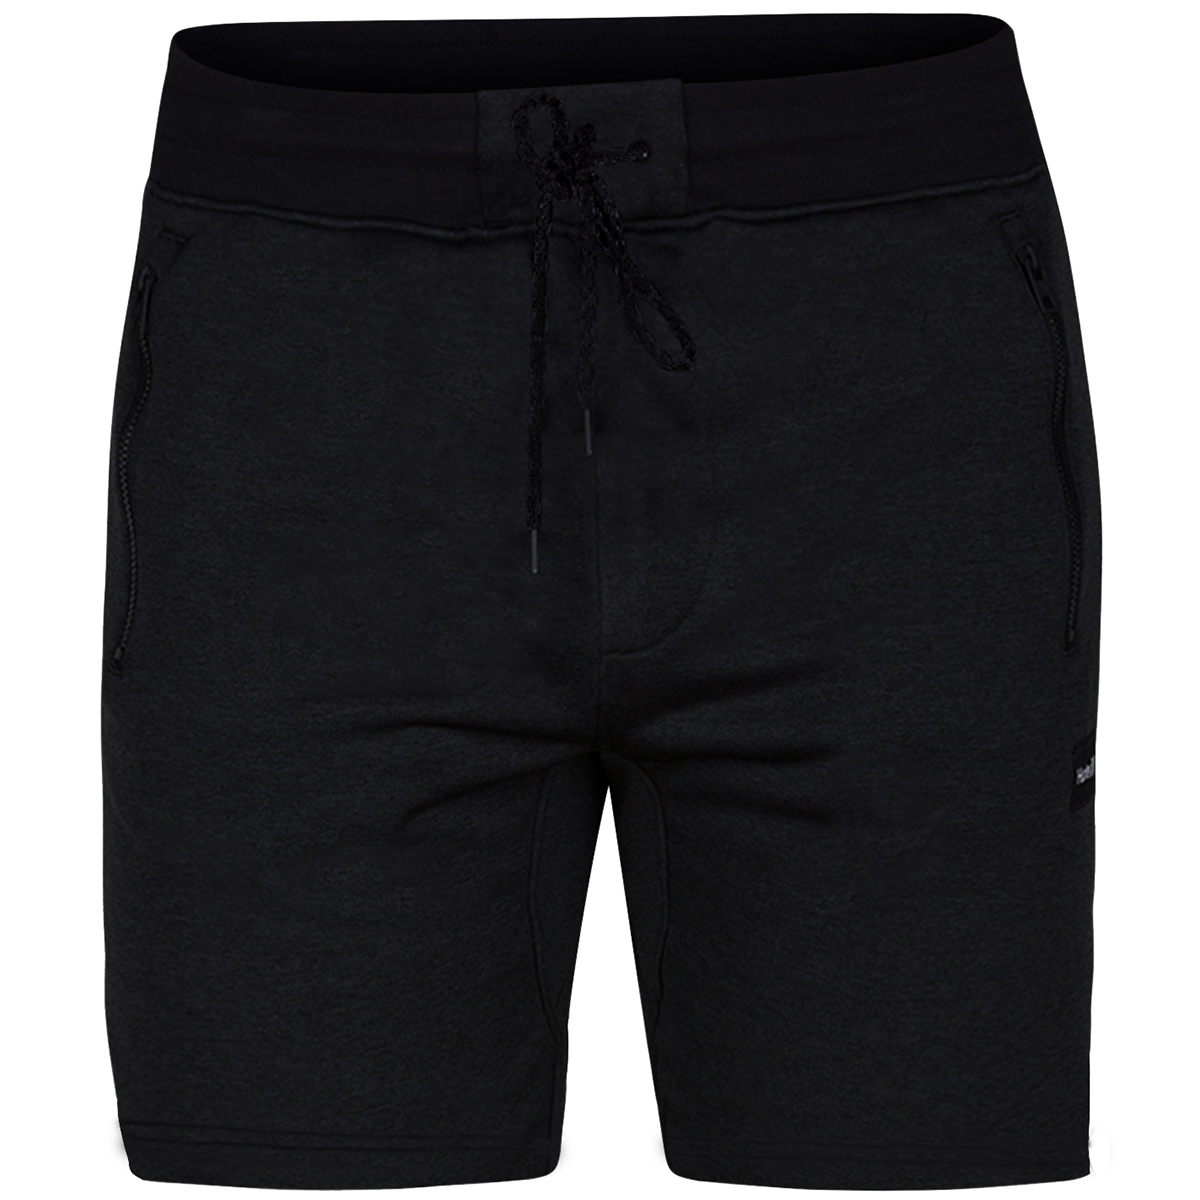 Hurley Men's Dri-Fit Disperse Shorts - Black, M